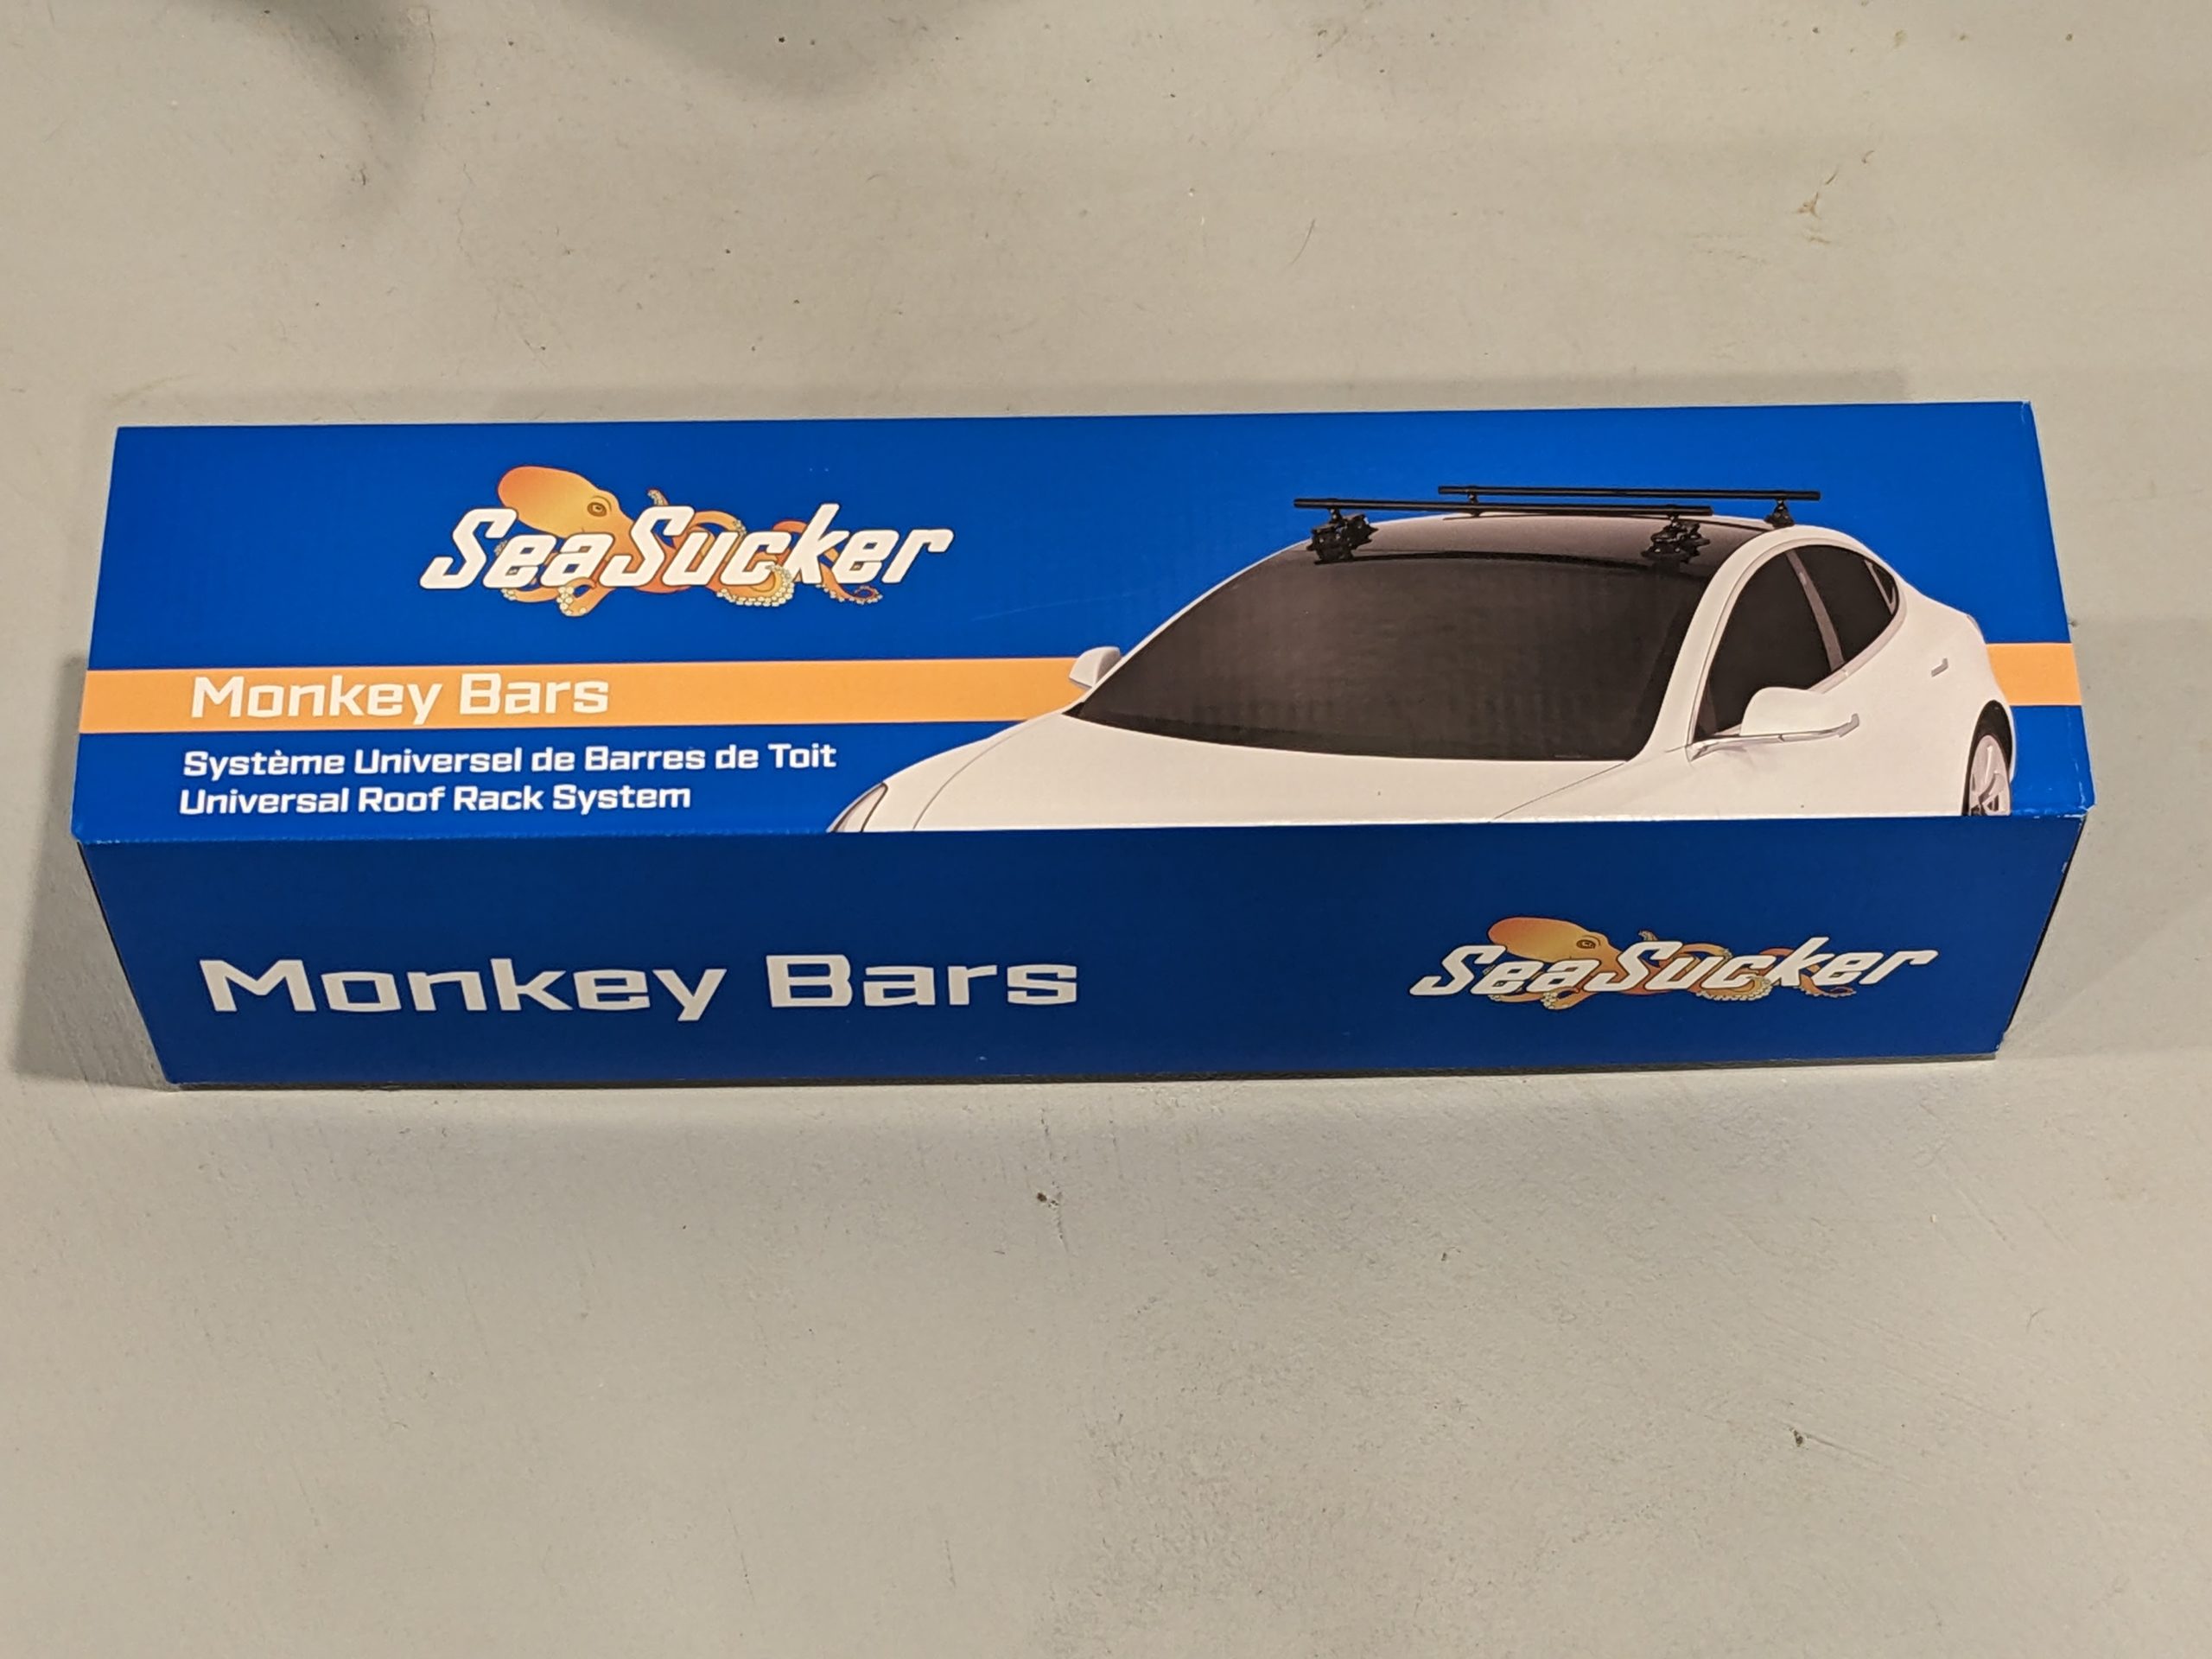 Seasucker monkey bars 2023 edition